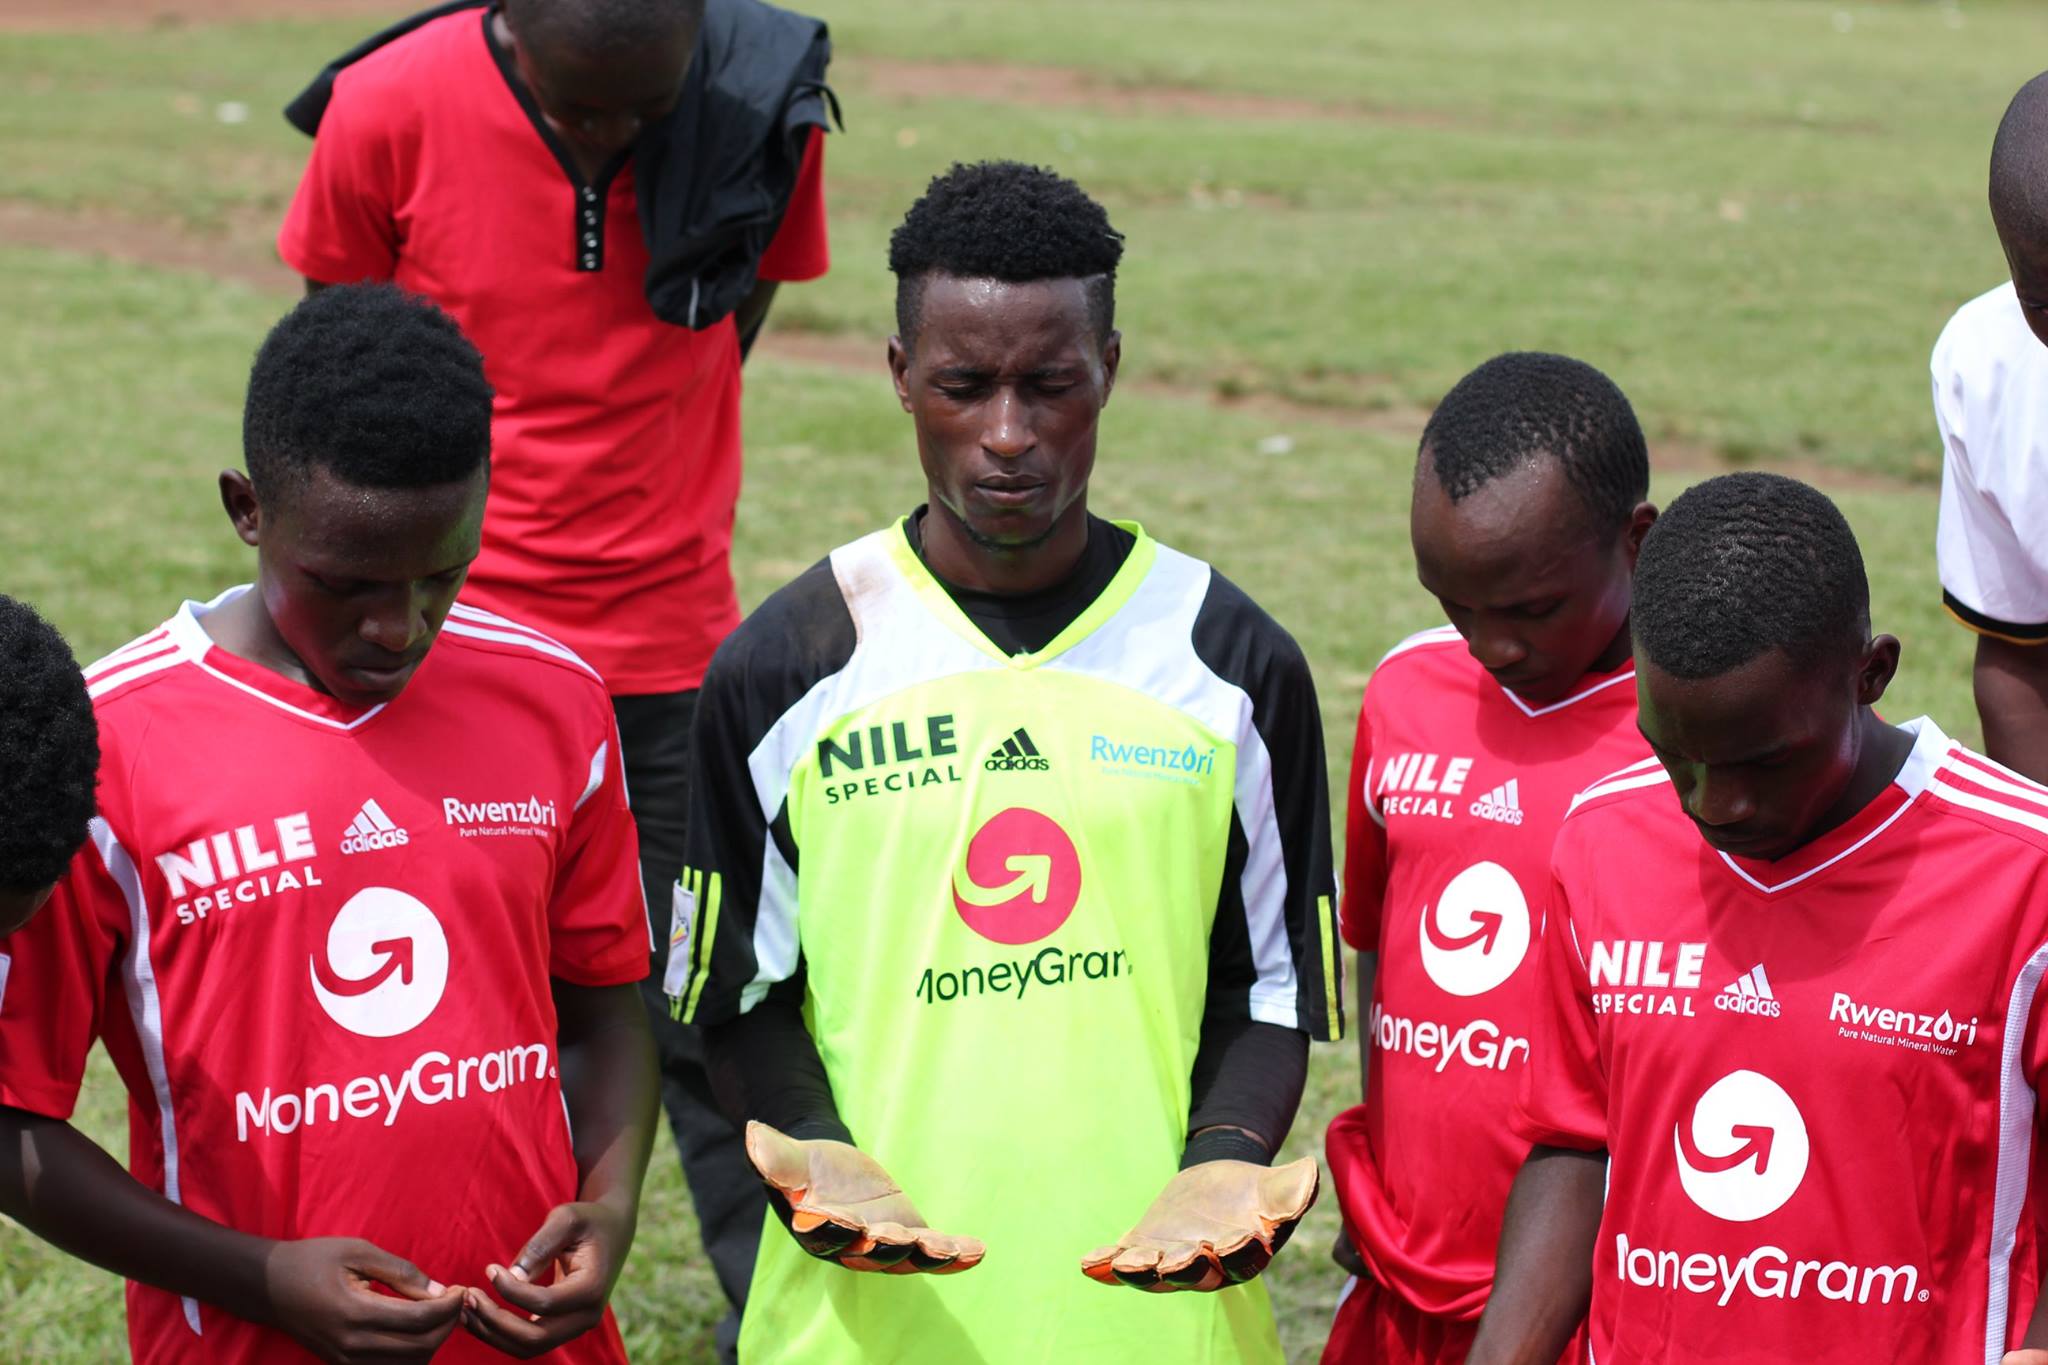 Makerere players seeking divine intervention